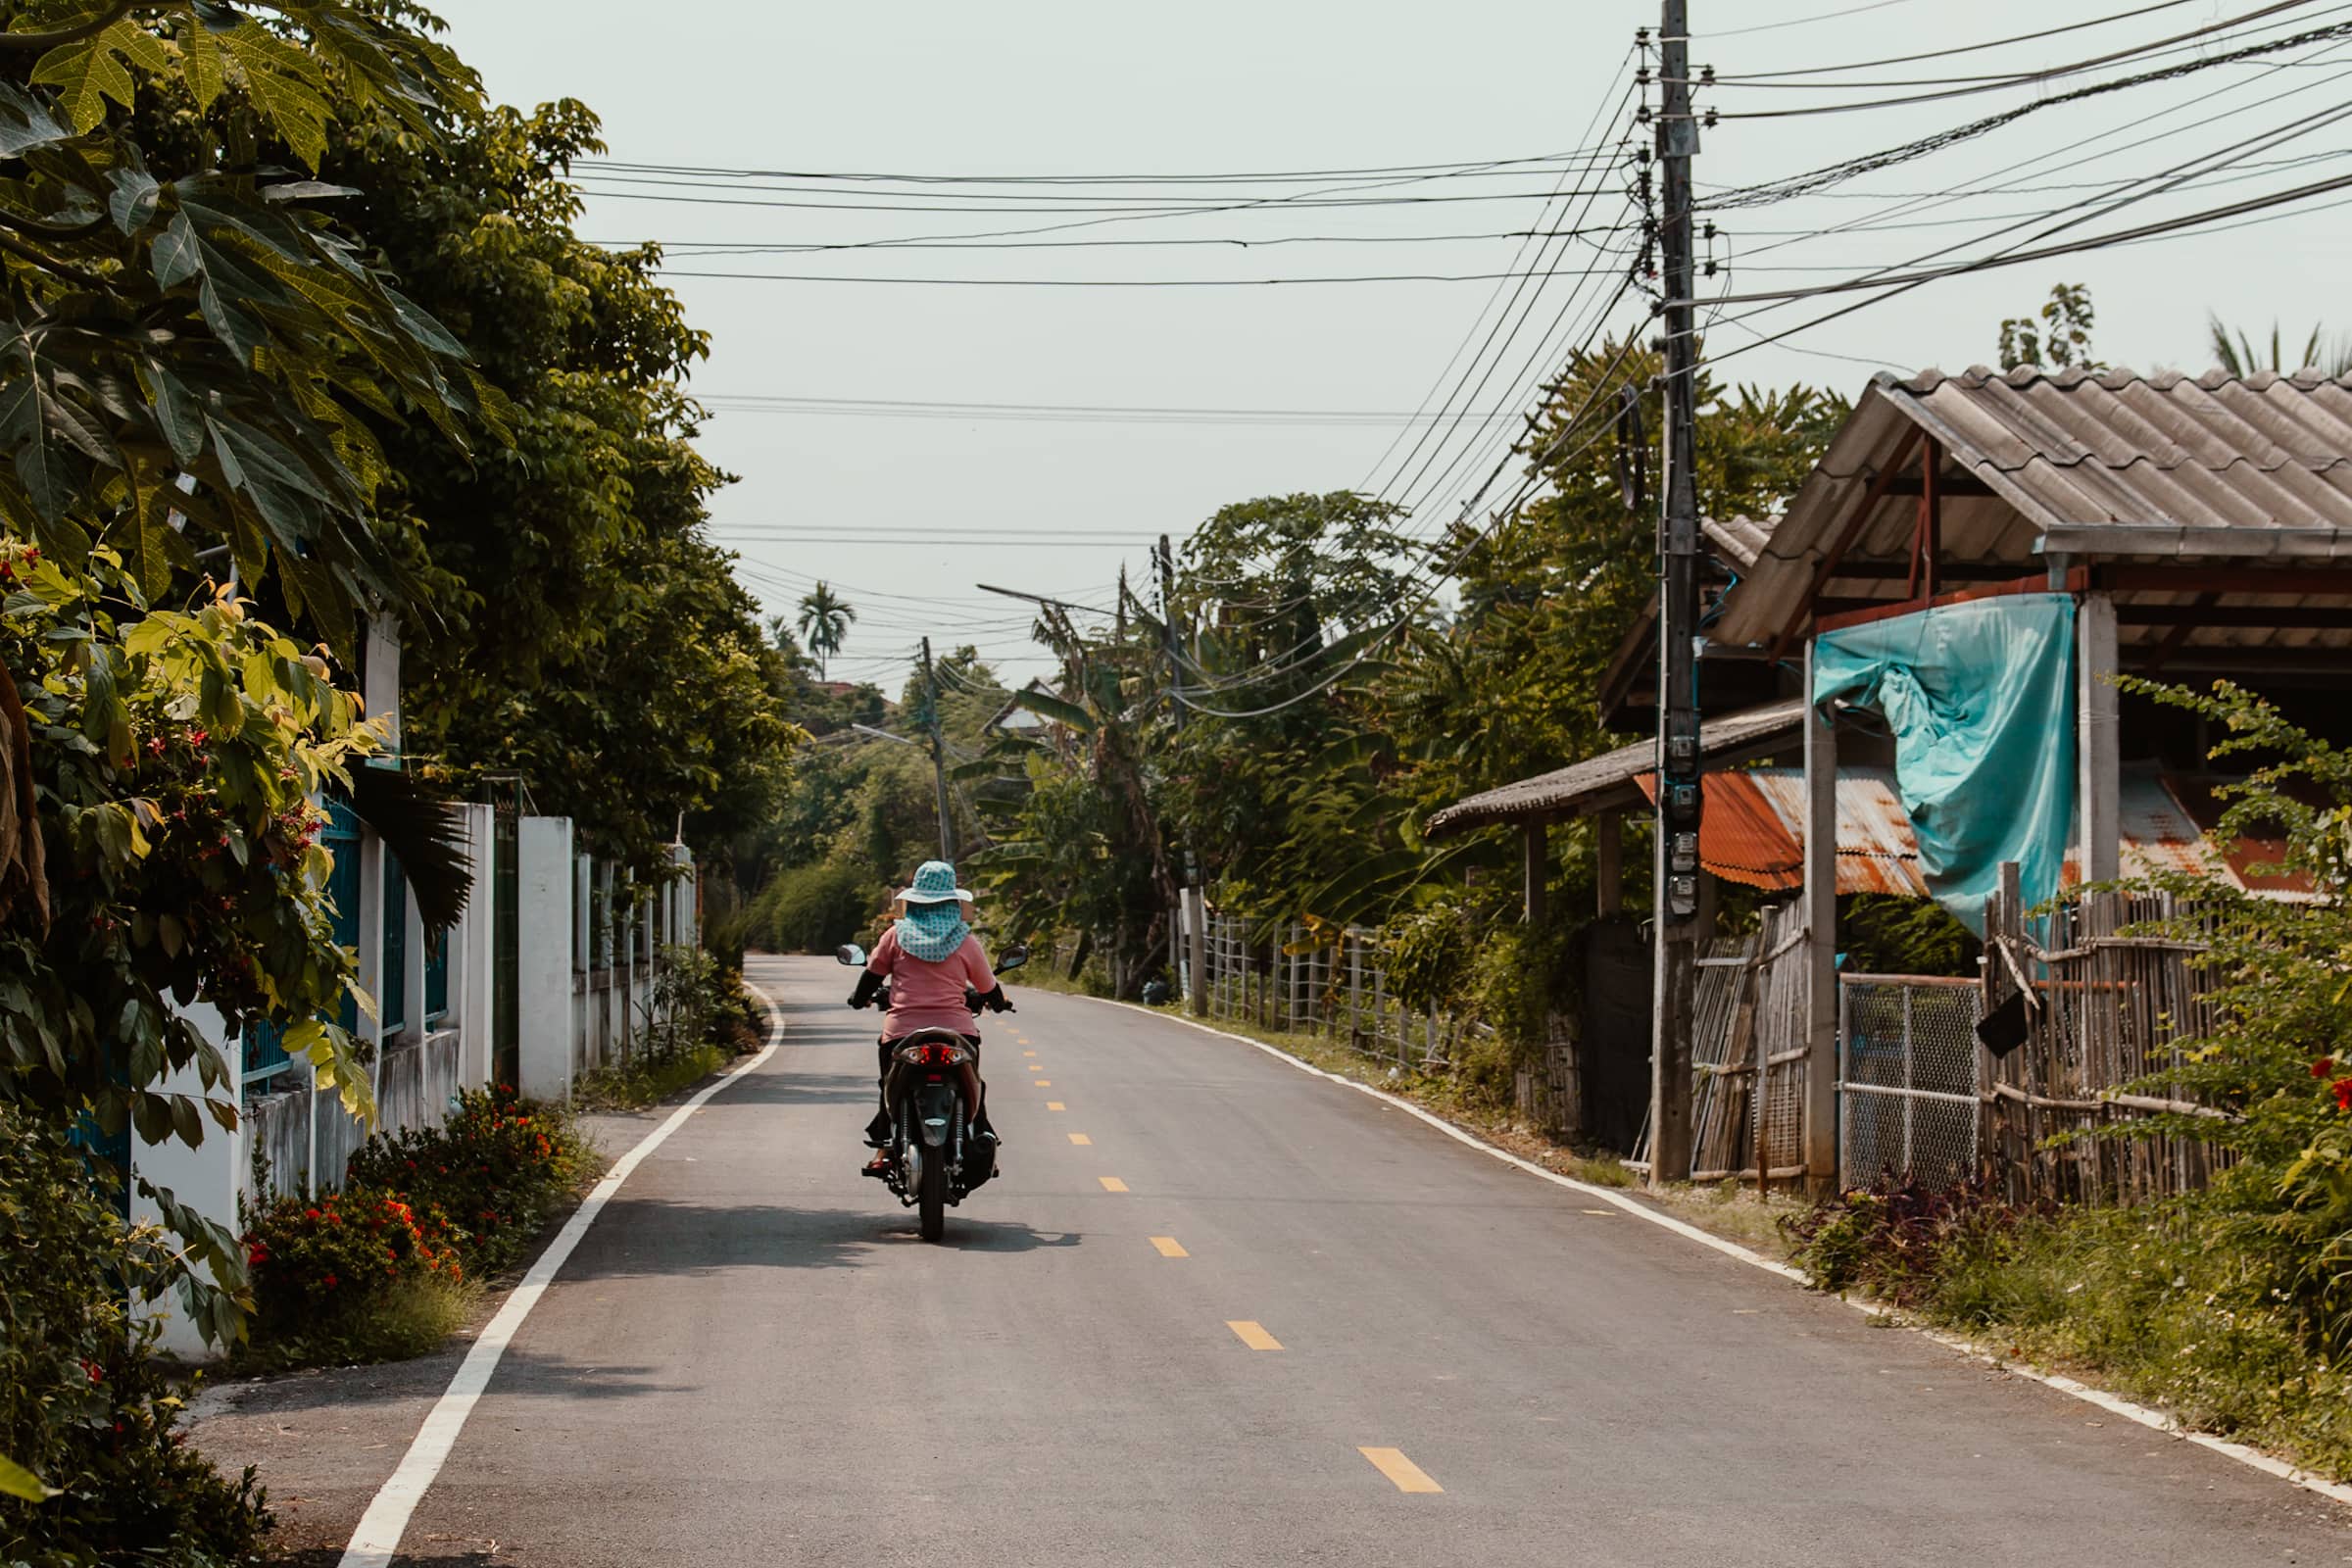 Landstraße um Chiang Mai Thailand mit Mofafahrer